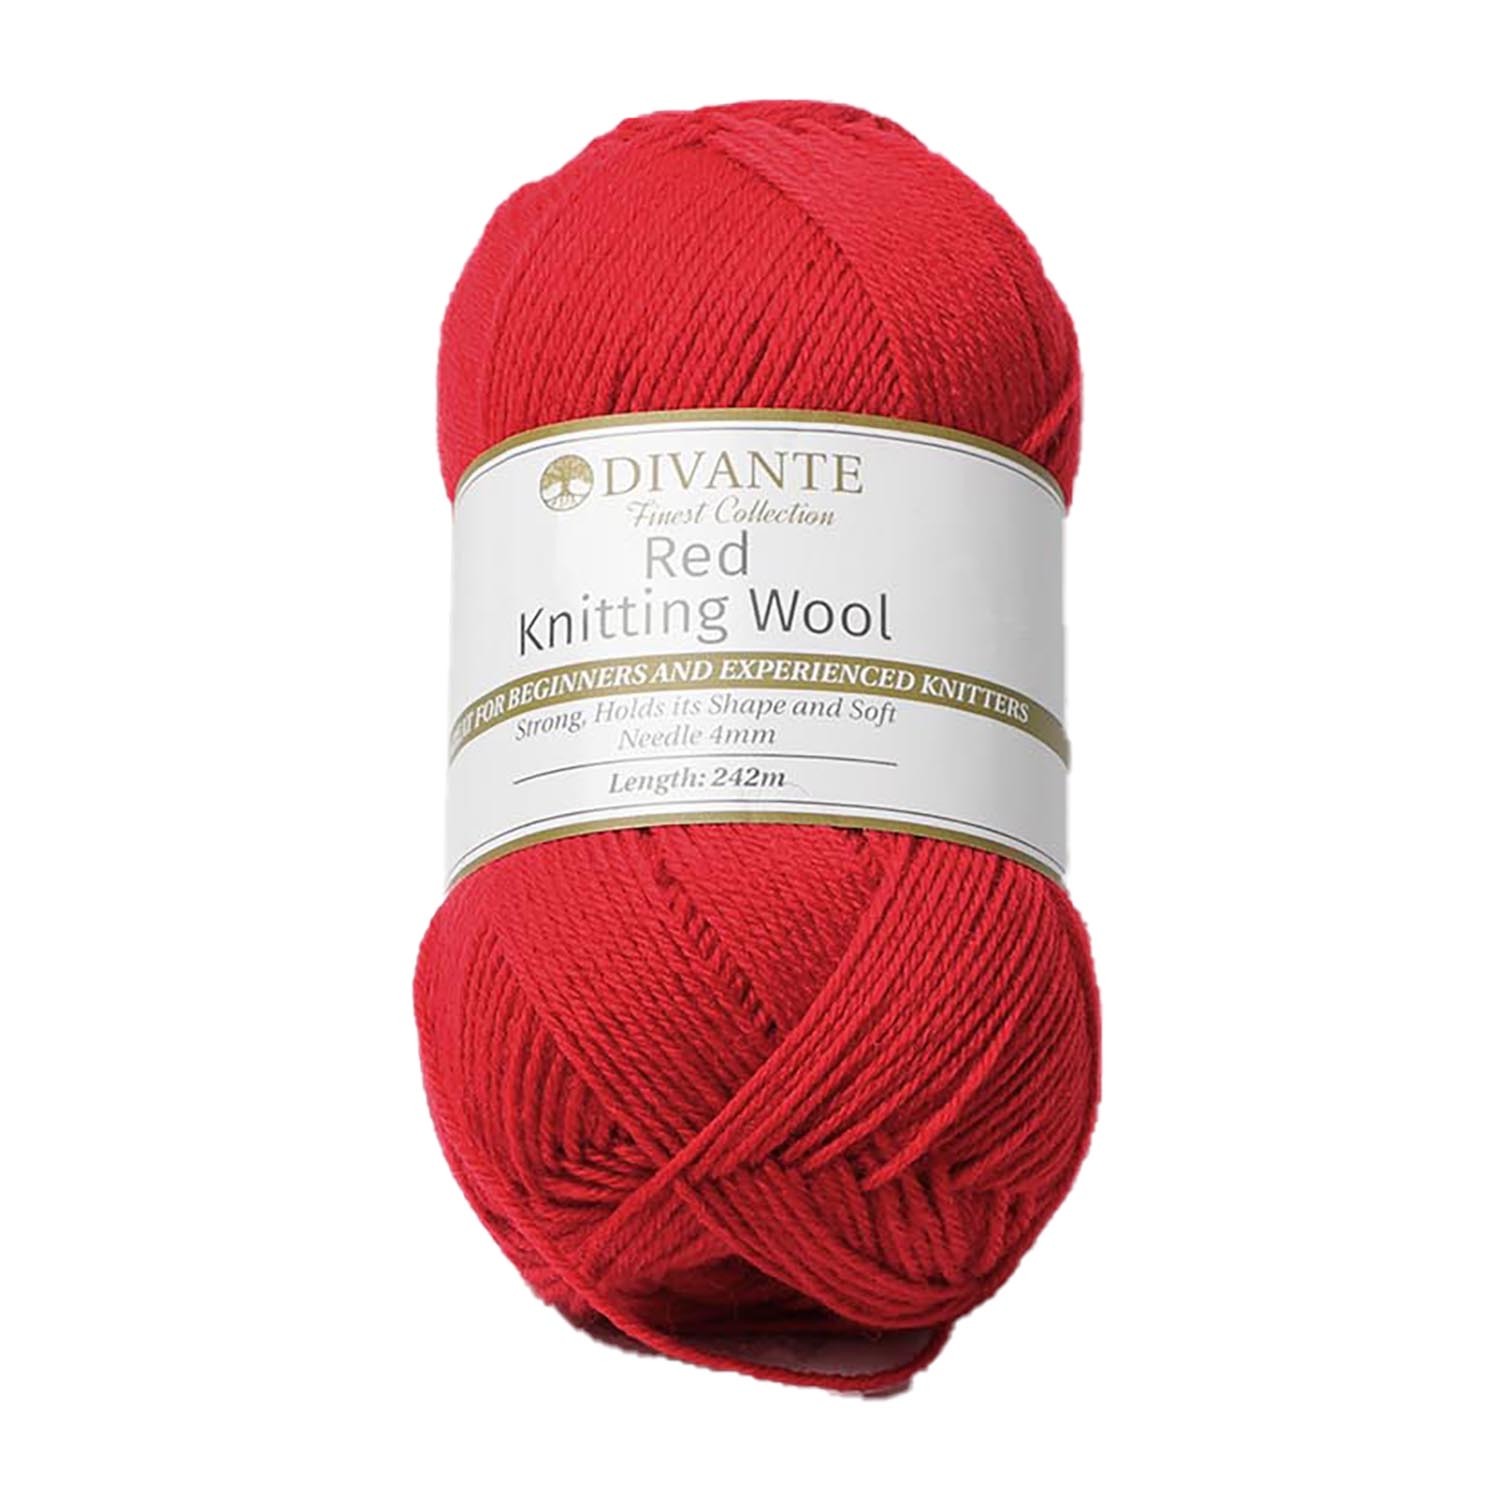 Divante Knitting Wool - Red Image